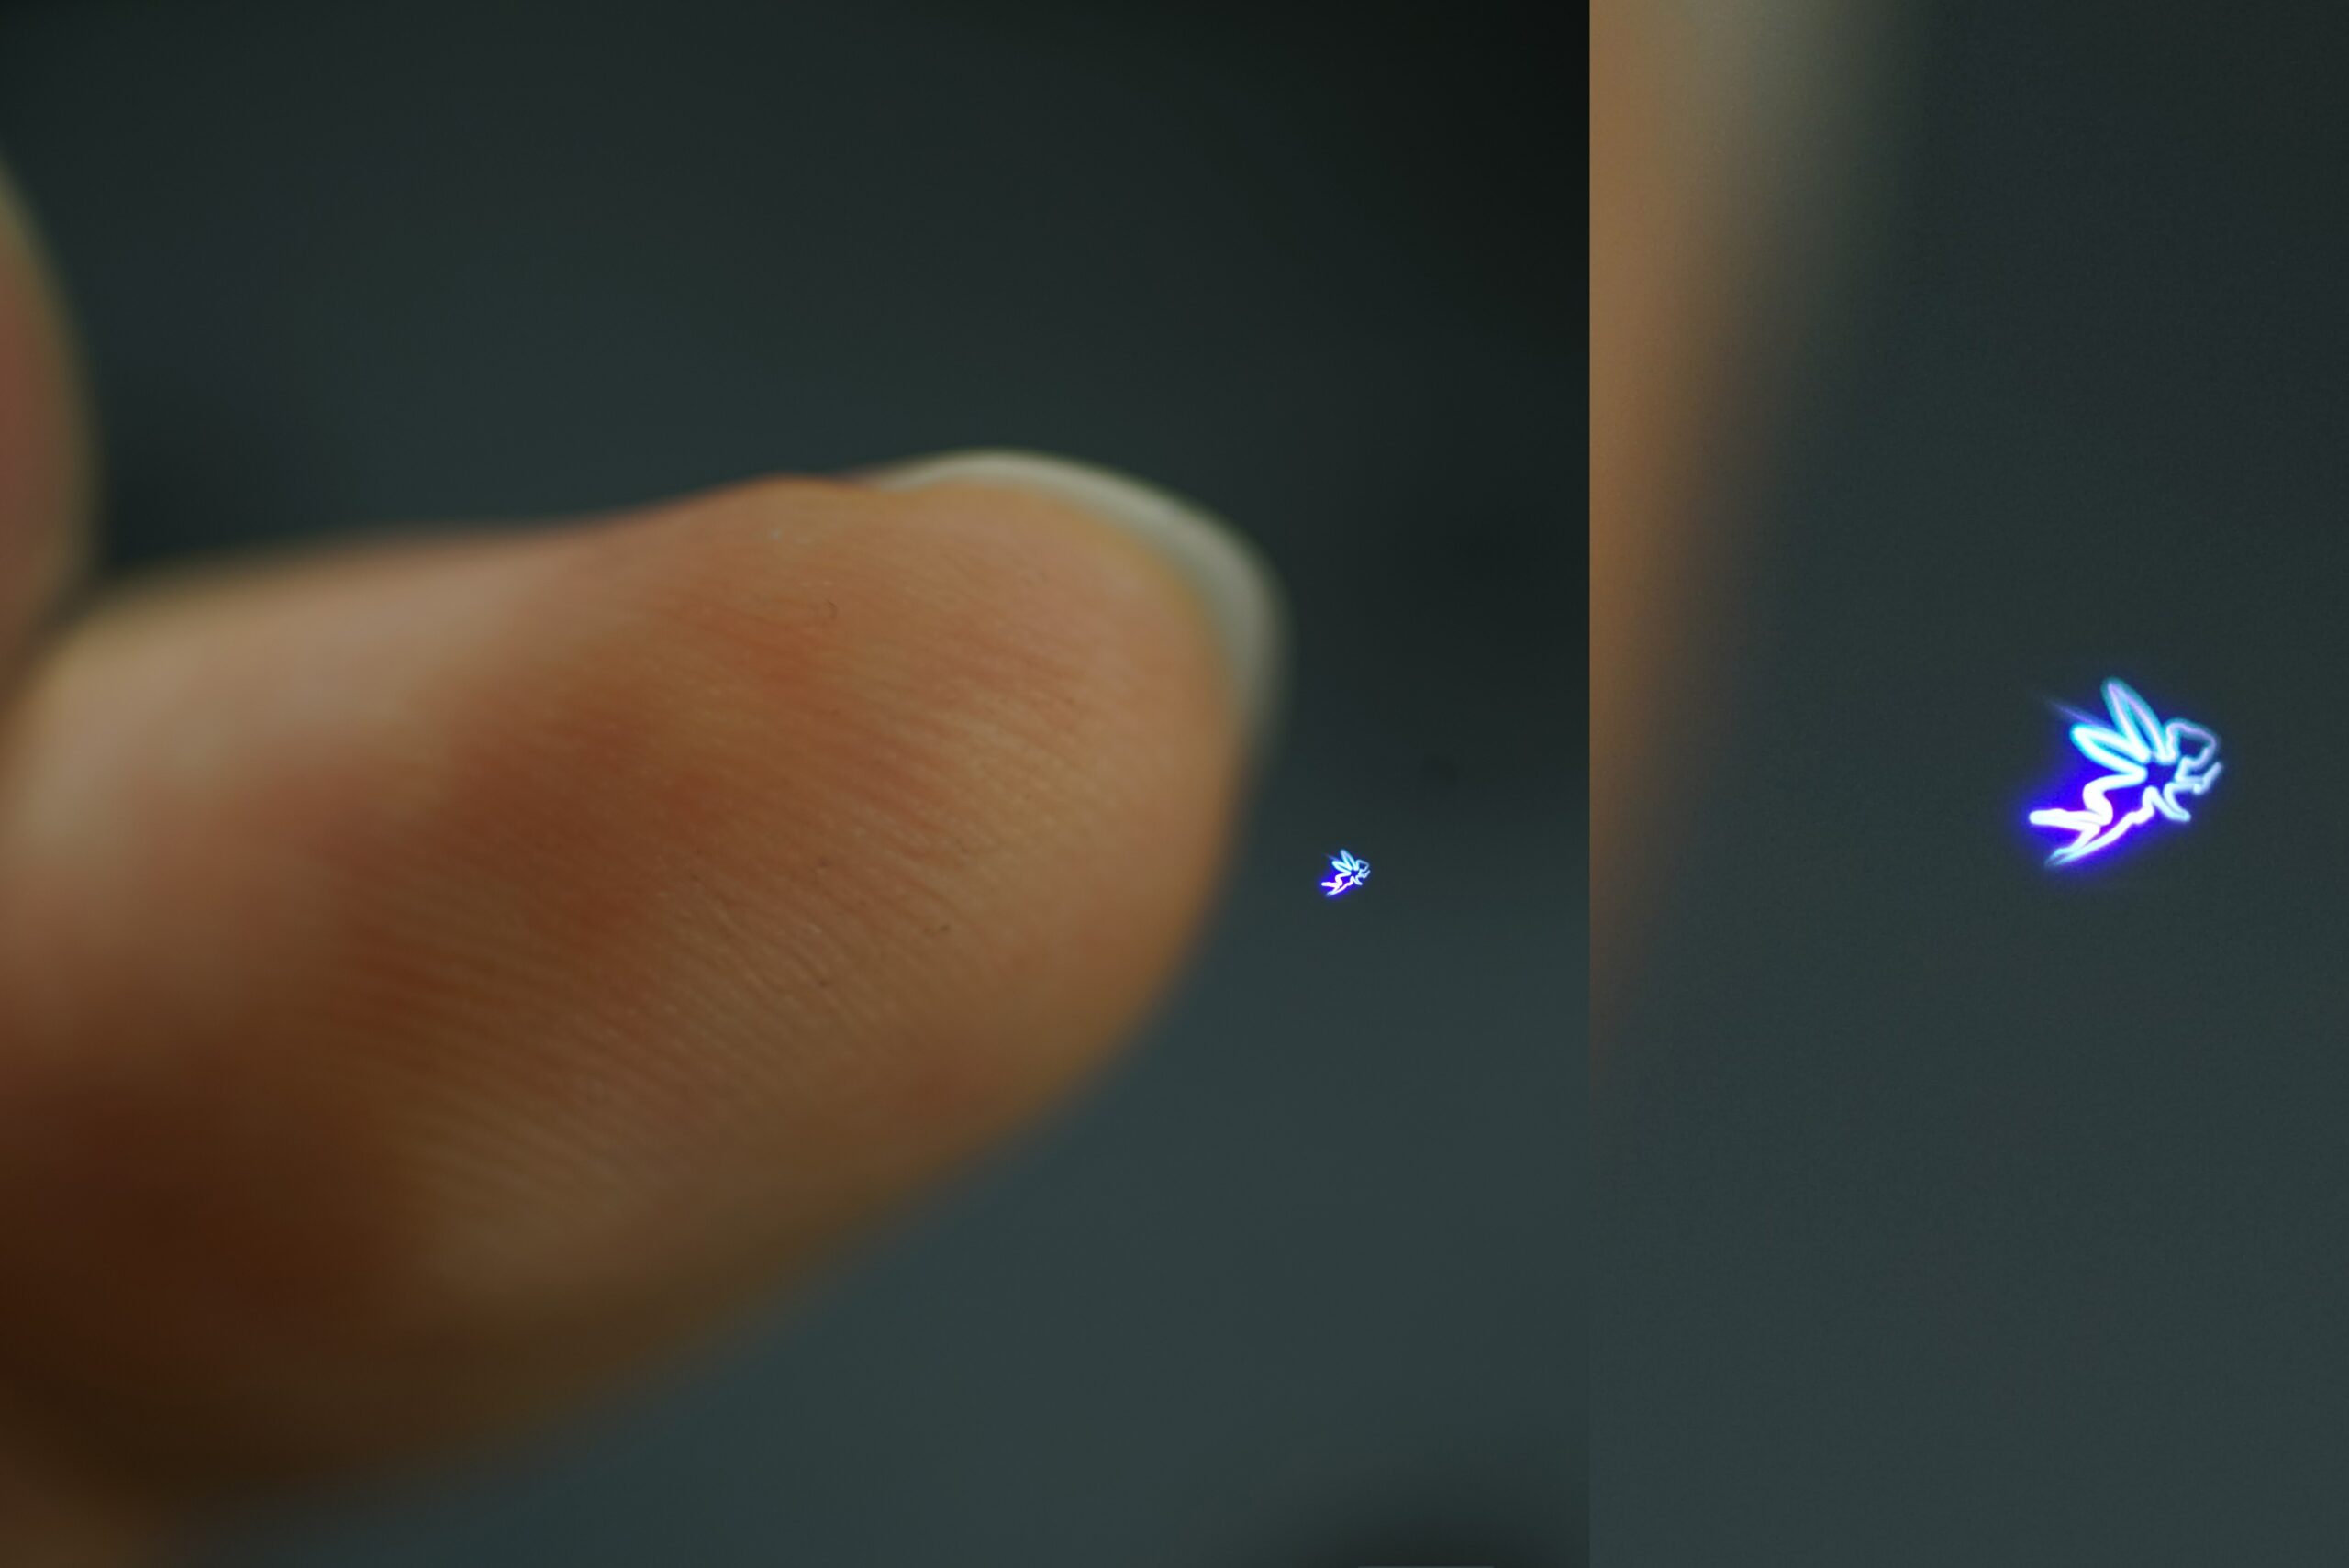 Researchers design holographic lenses based on plasma